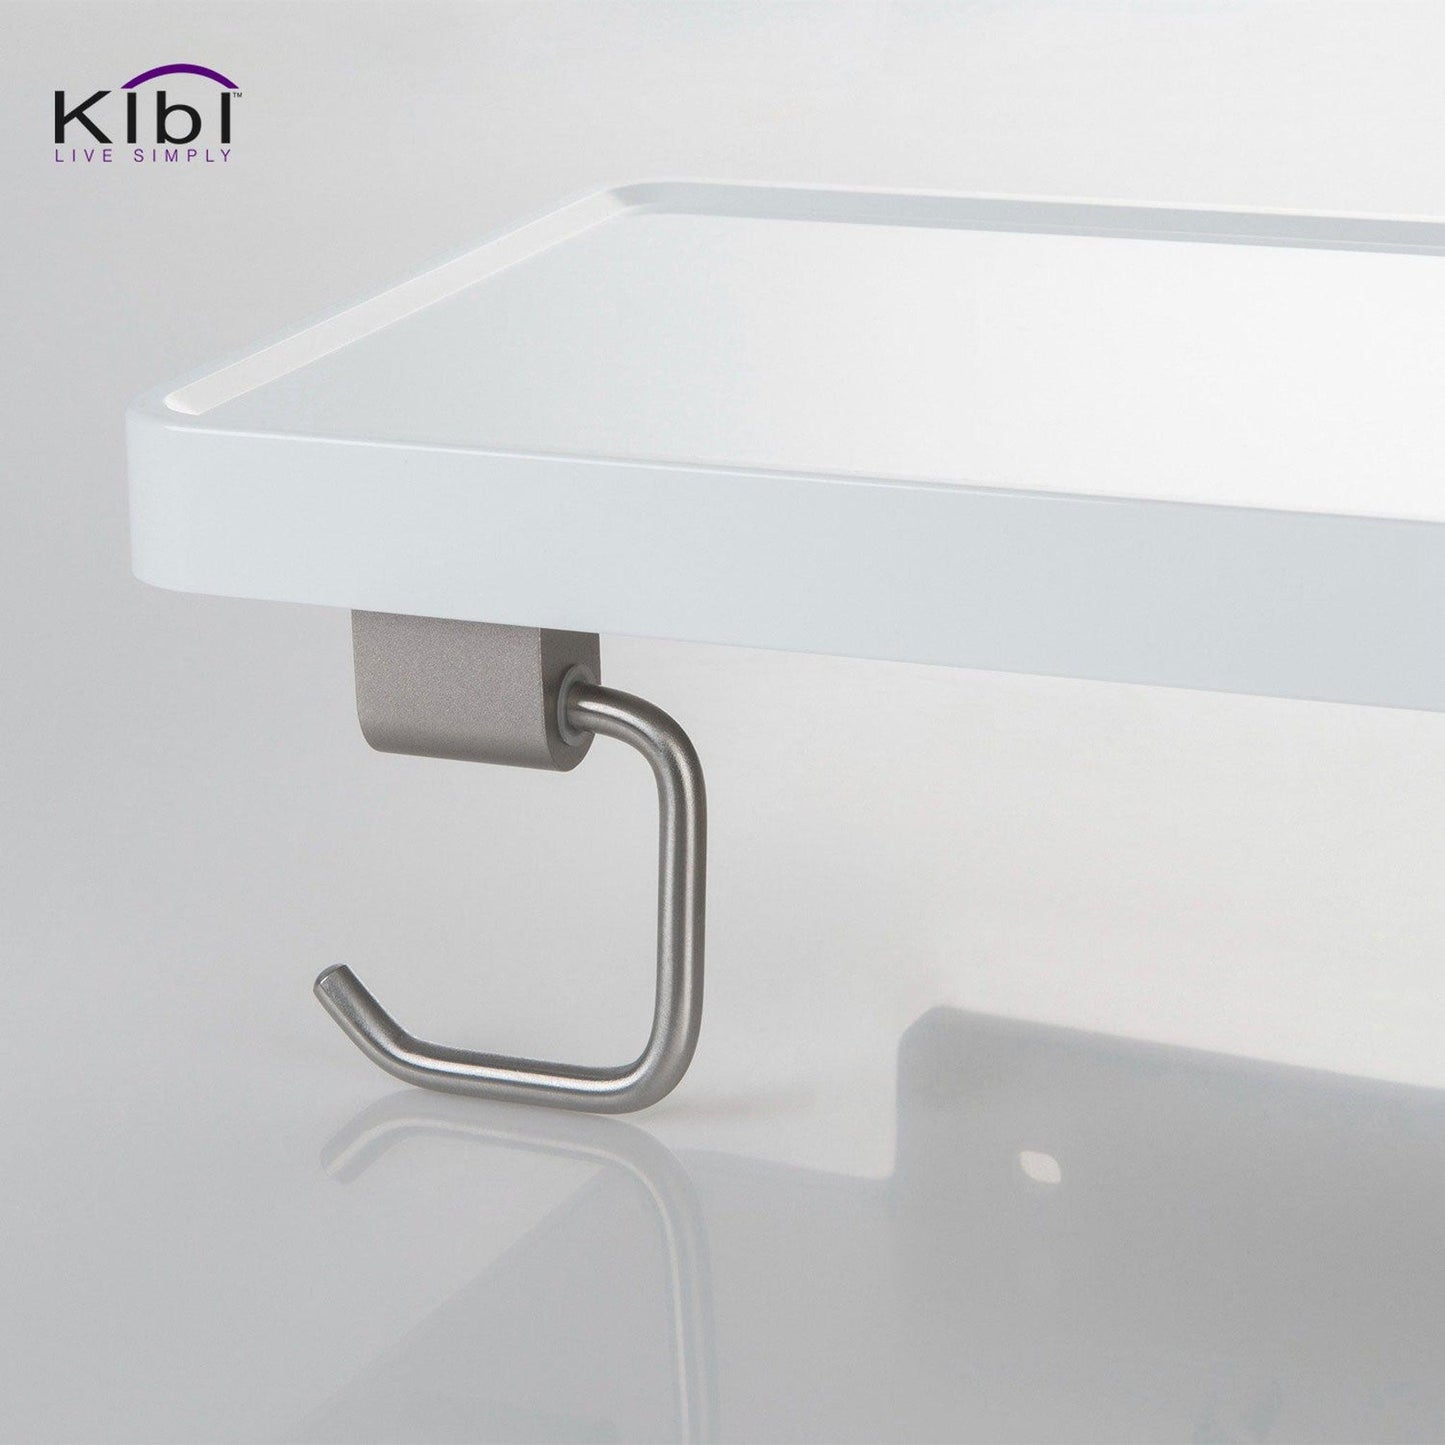 KIBI Deco Bathroom Tissue Holder With Shelf and Hook in Brushed Nickel Finish